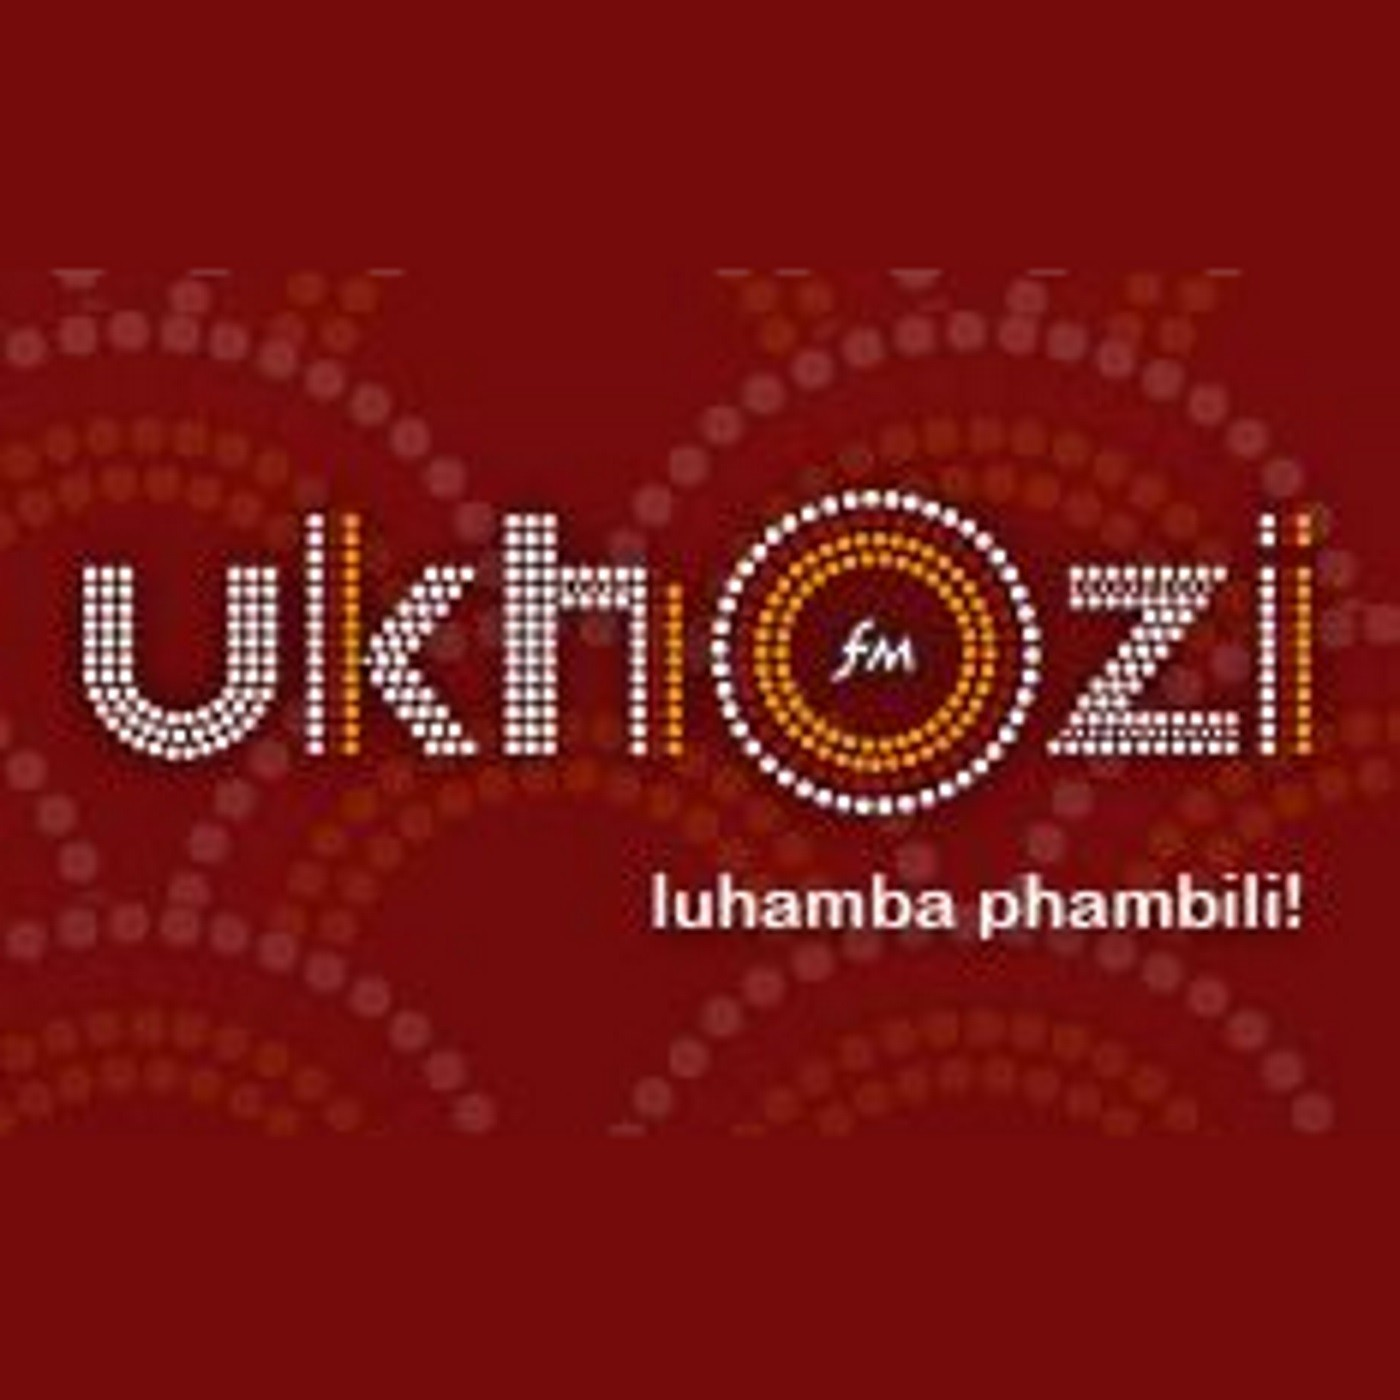 Khuthazeka no Sthembiso Zondo_Umona wasemndenini uyaniphazamisa niwumndeni